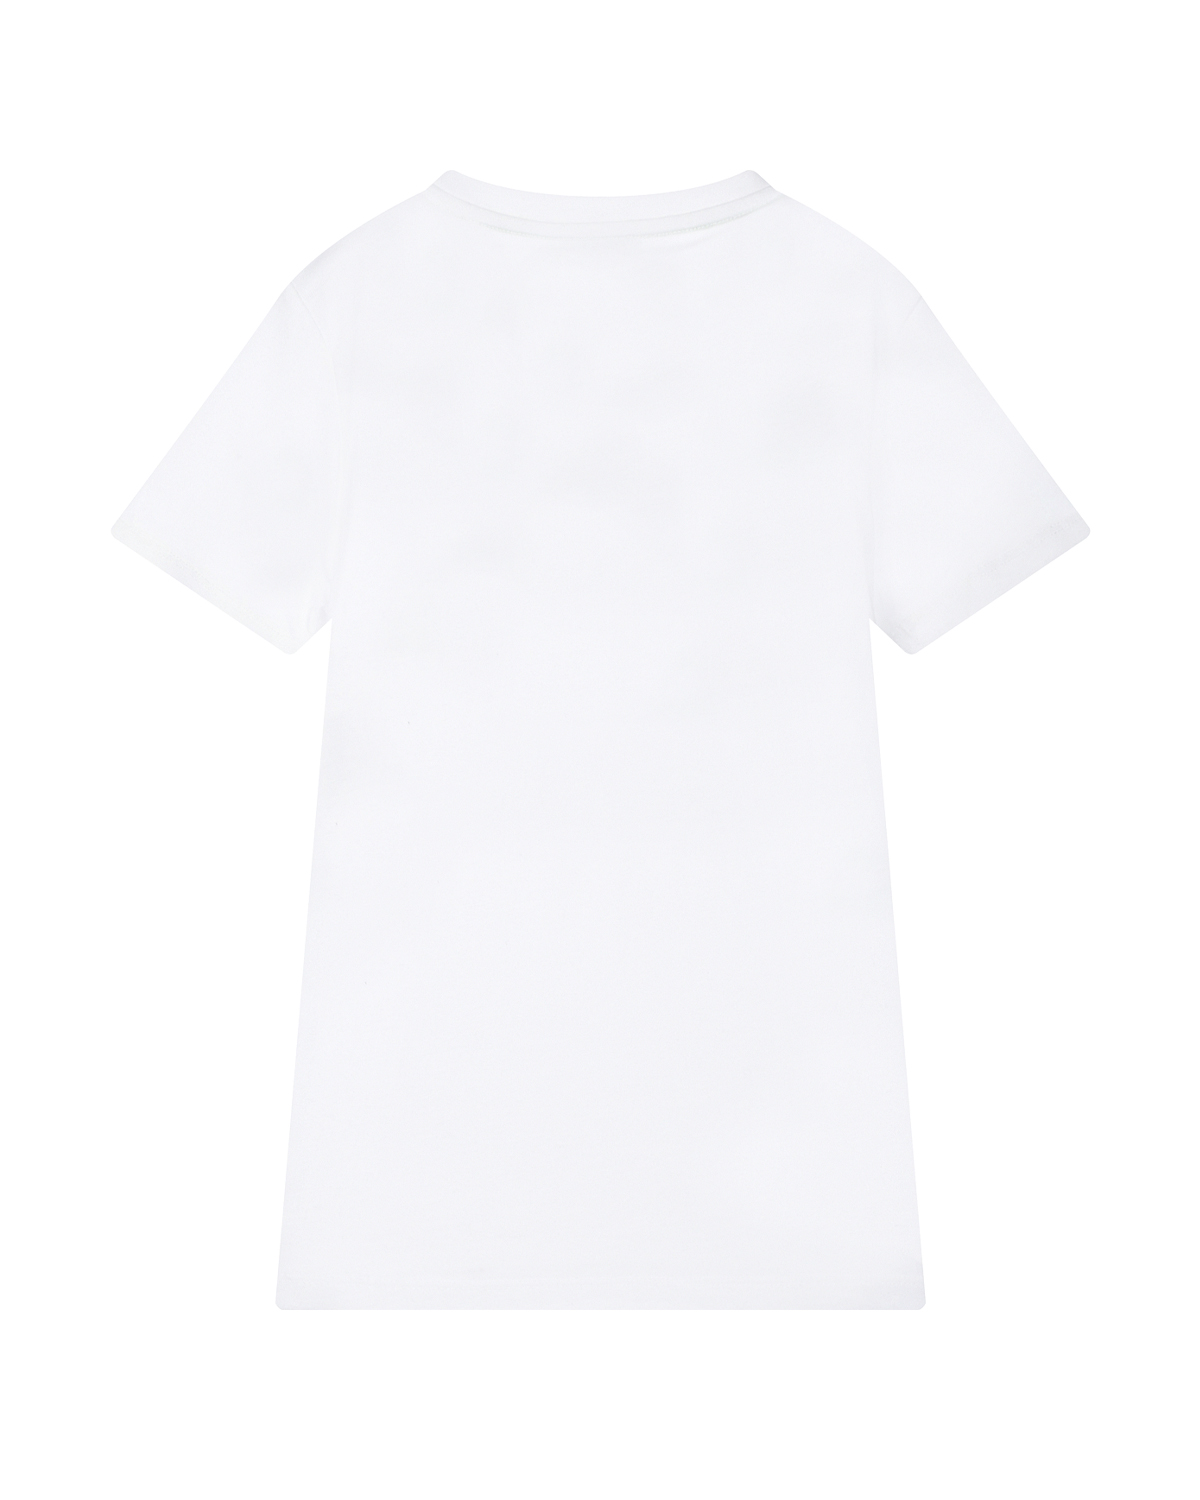 Белая футболка с принтом "Rugby" Bikkembergs детская, размер 116, цвет белый - фото 2